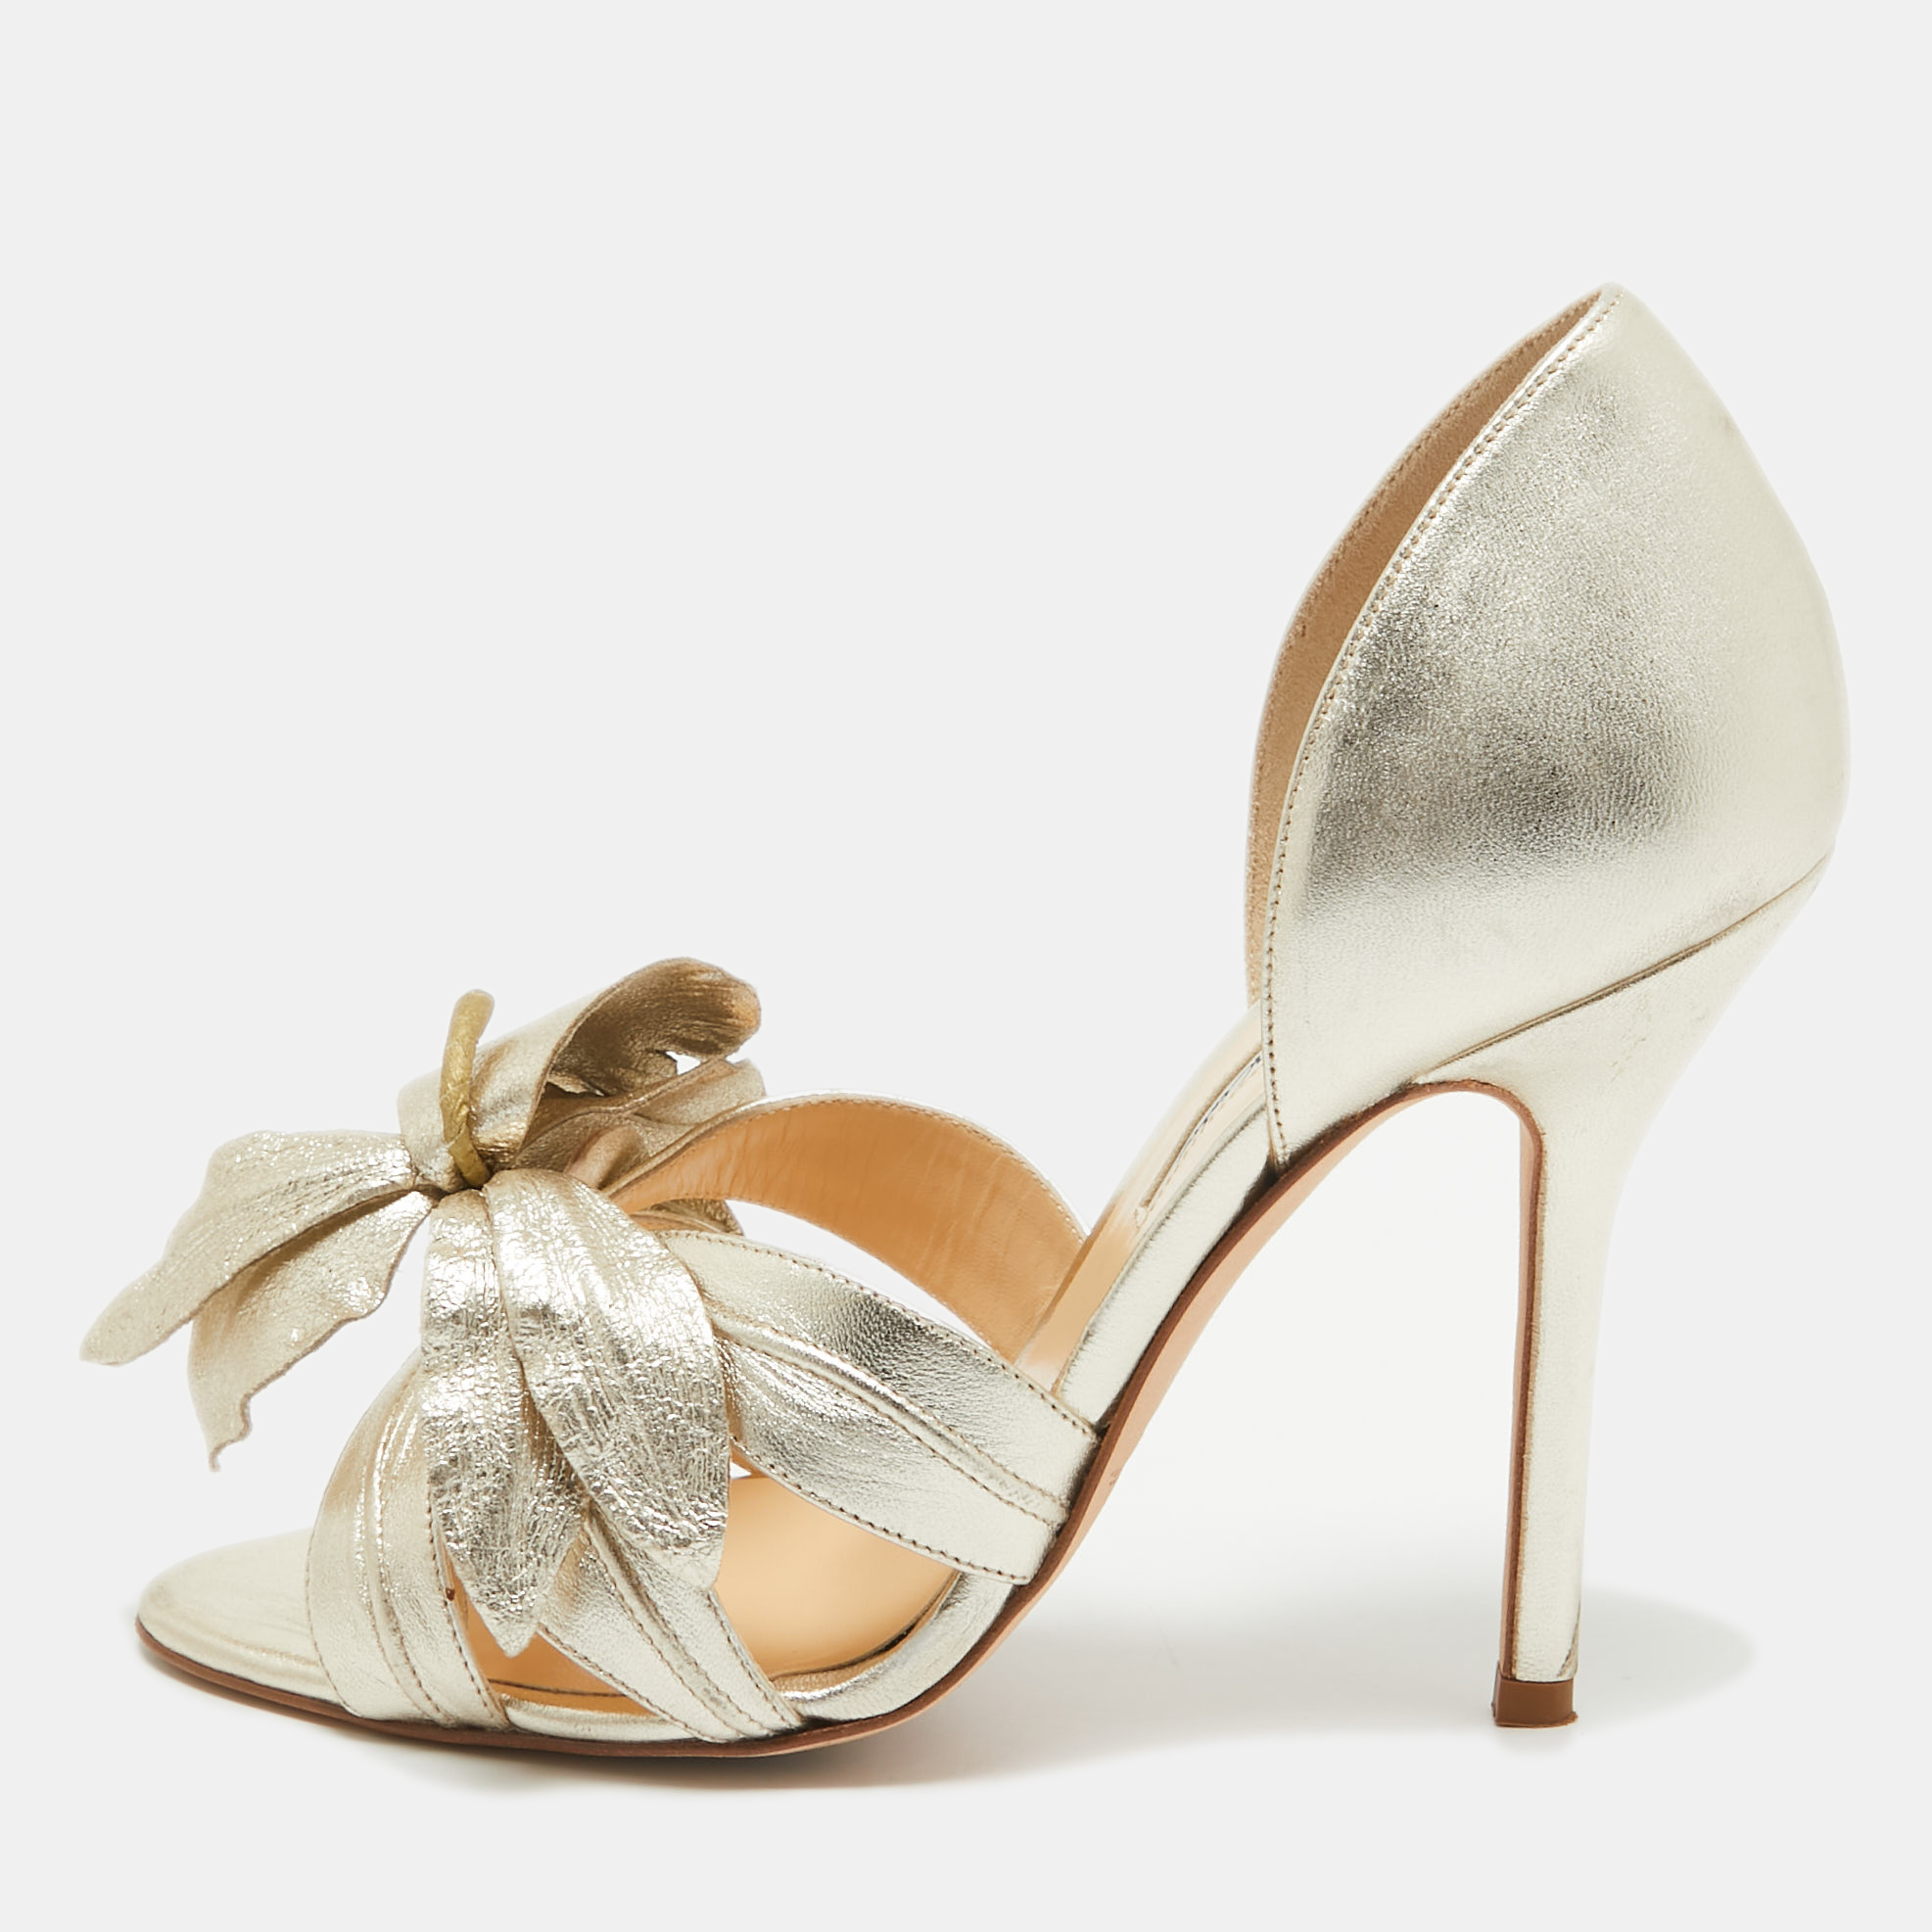 Oscar de la renta silver leather flower embellished peep toe sandals size 36